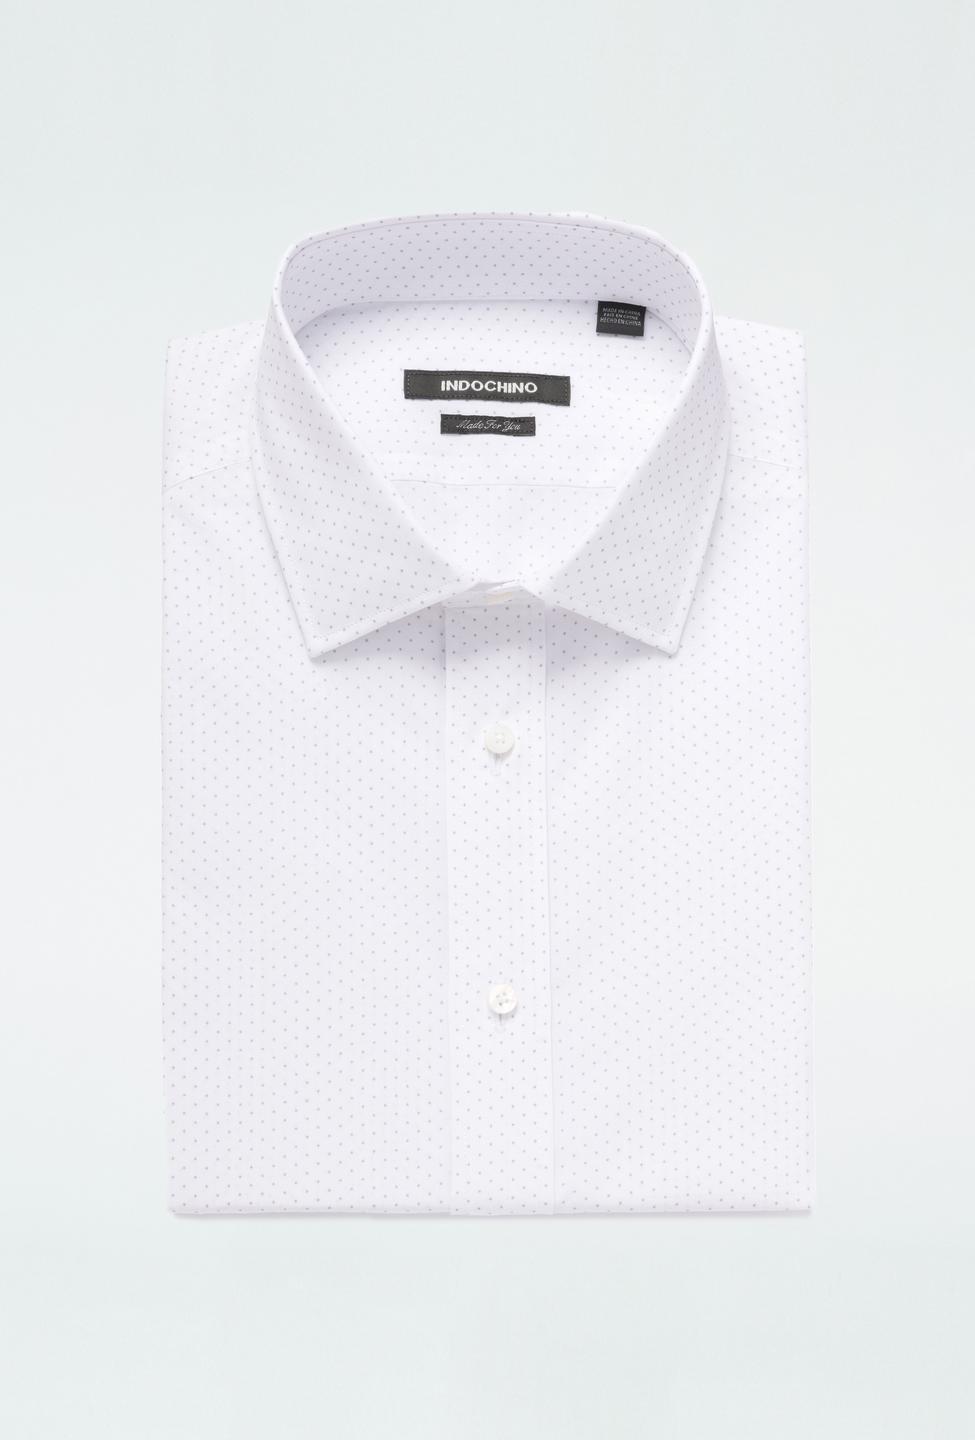 Gray shirt - Hayton Pattern Design from Premium Indochino Collection